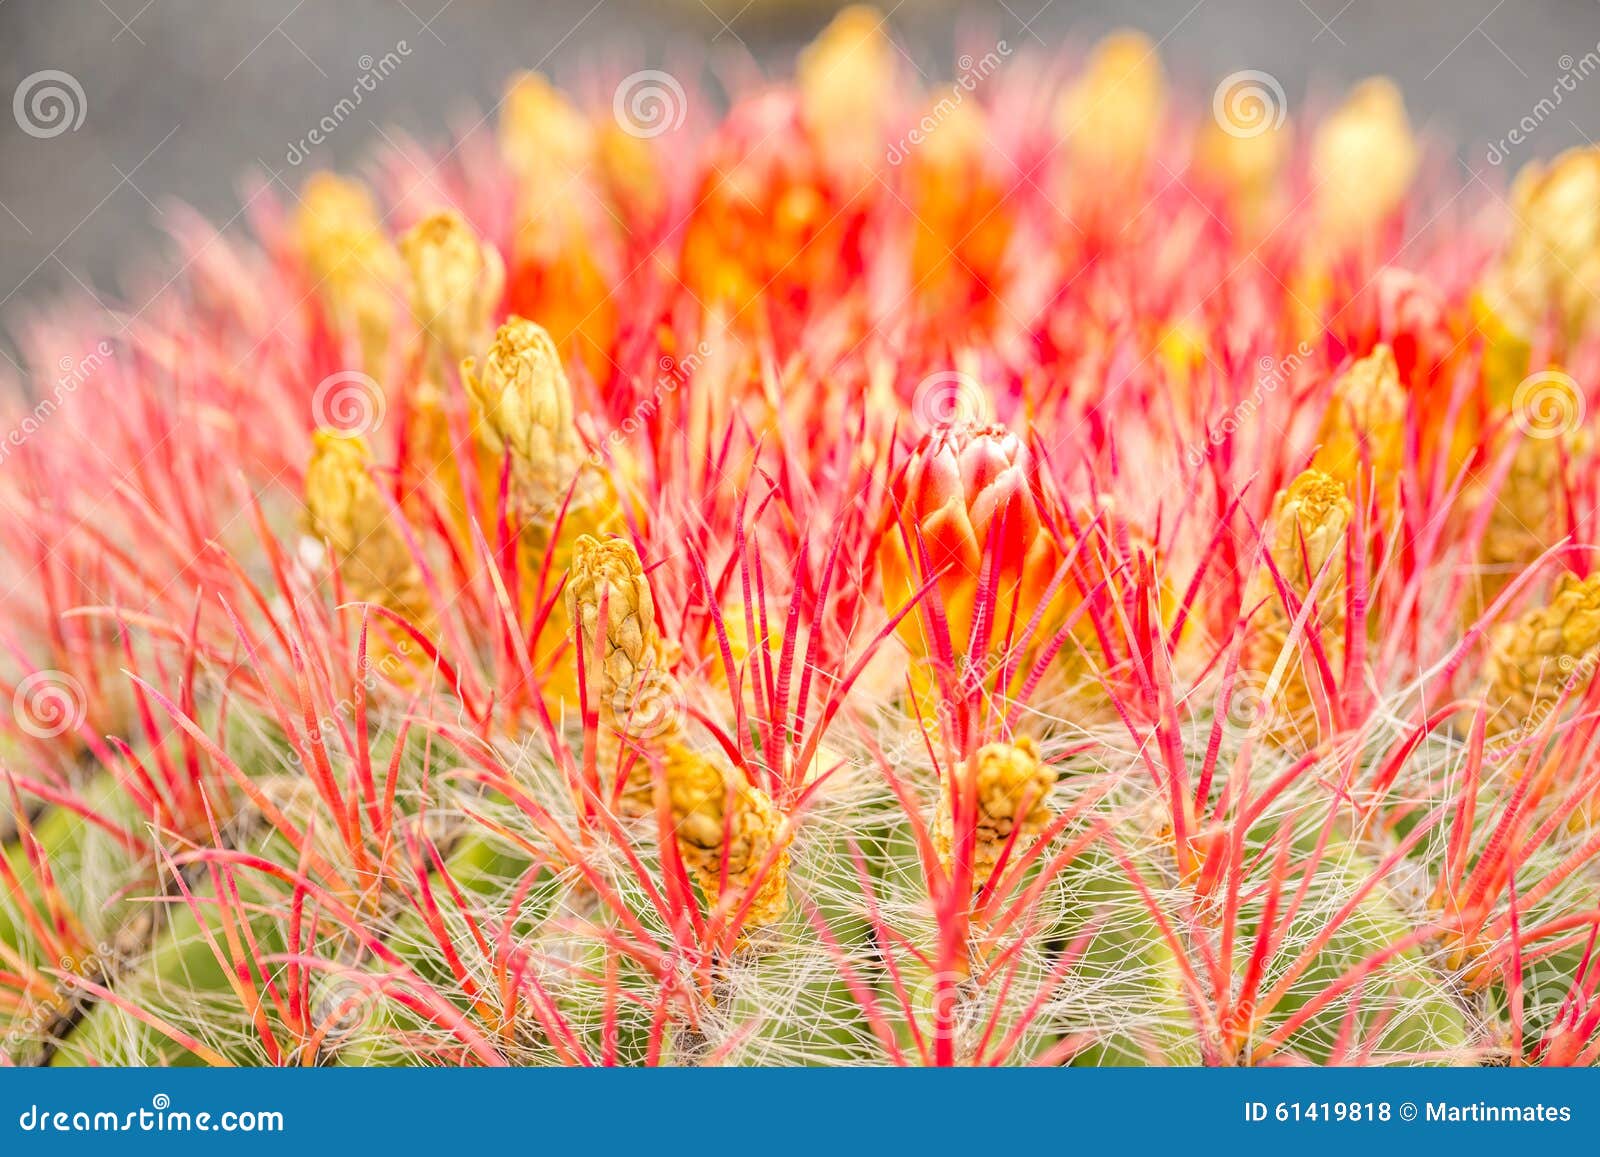 detail of red bloom cactus